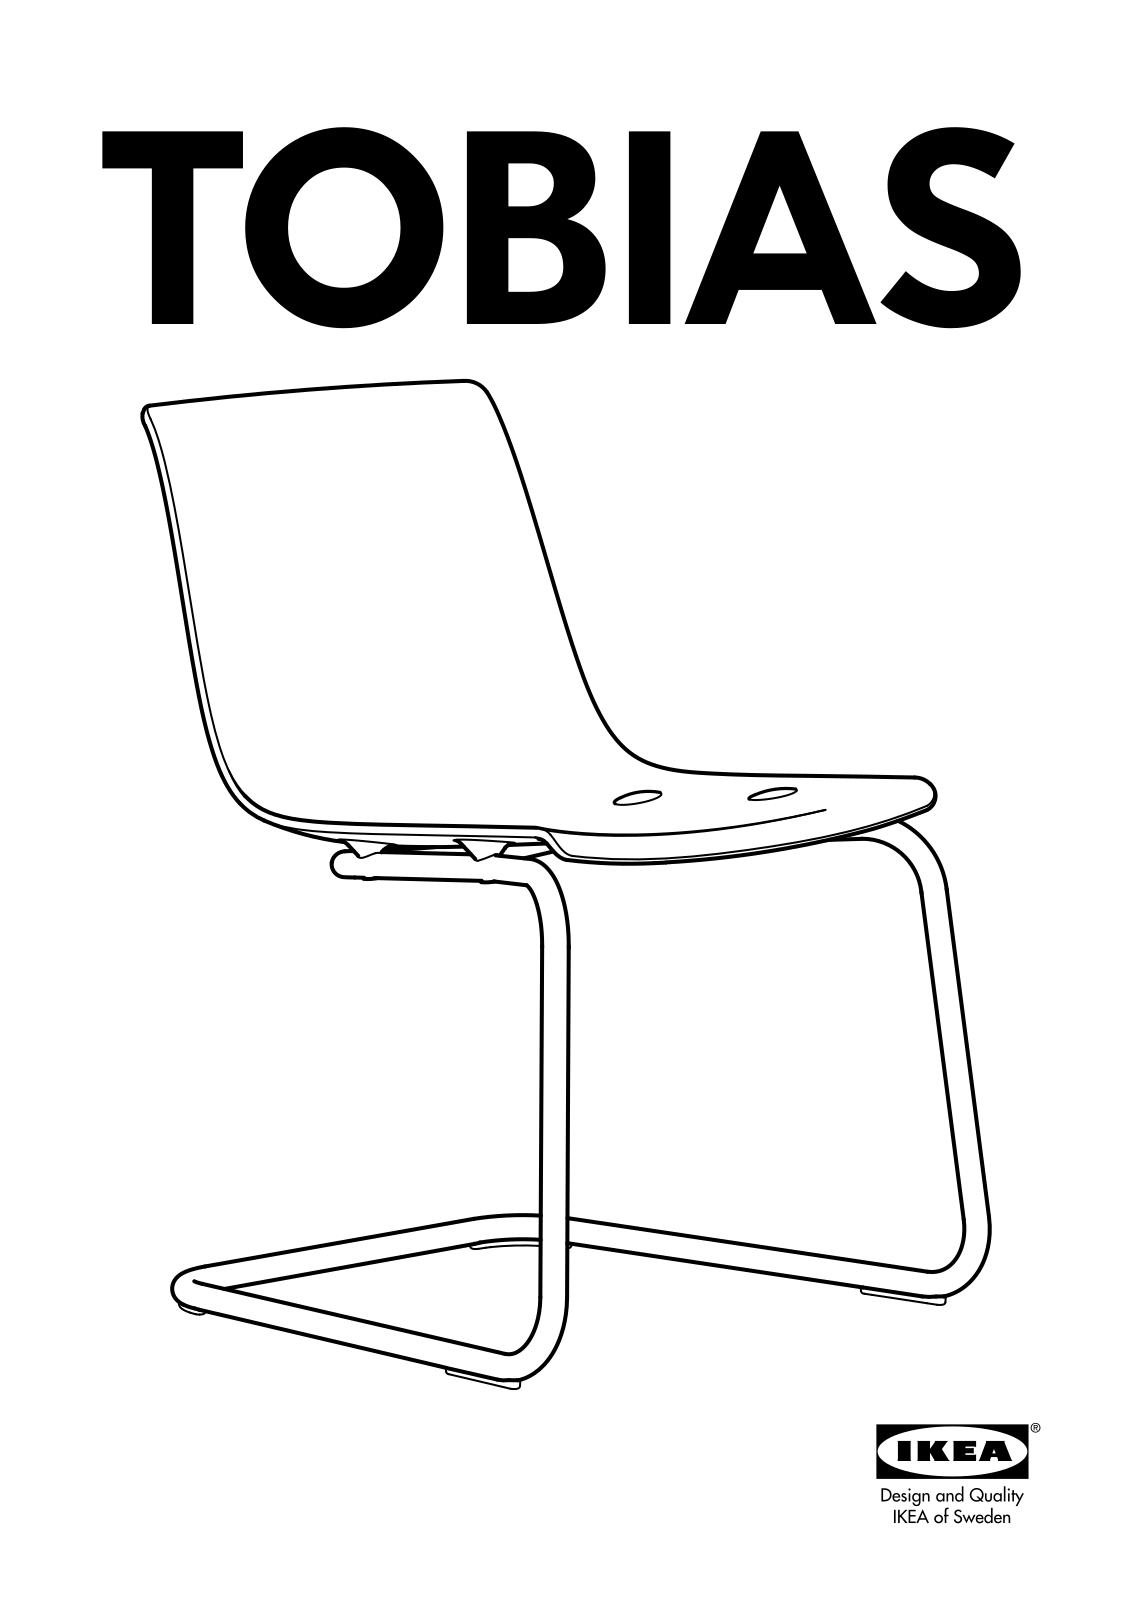 IKEA TOBIAS User Manual